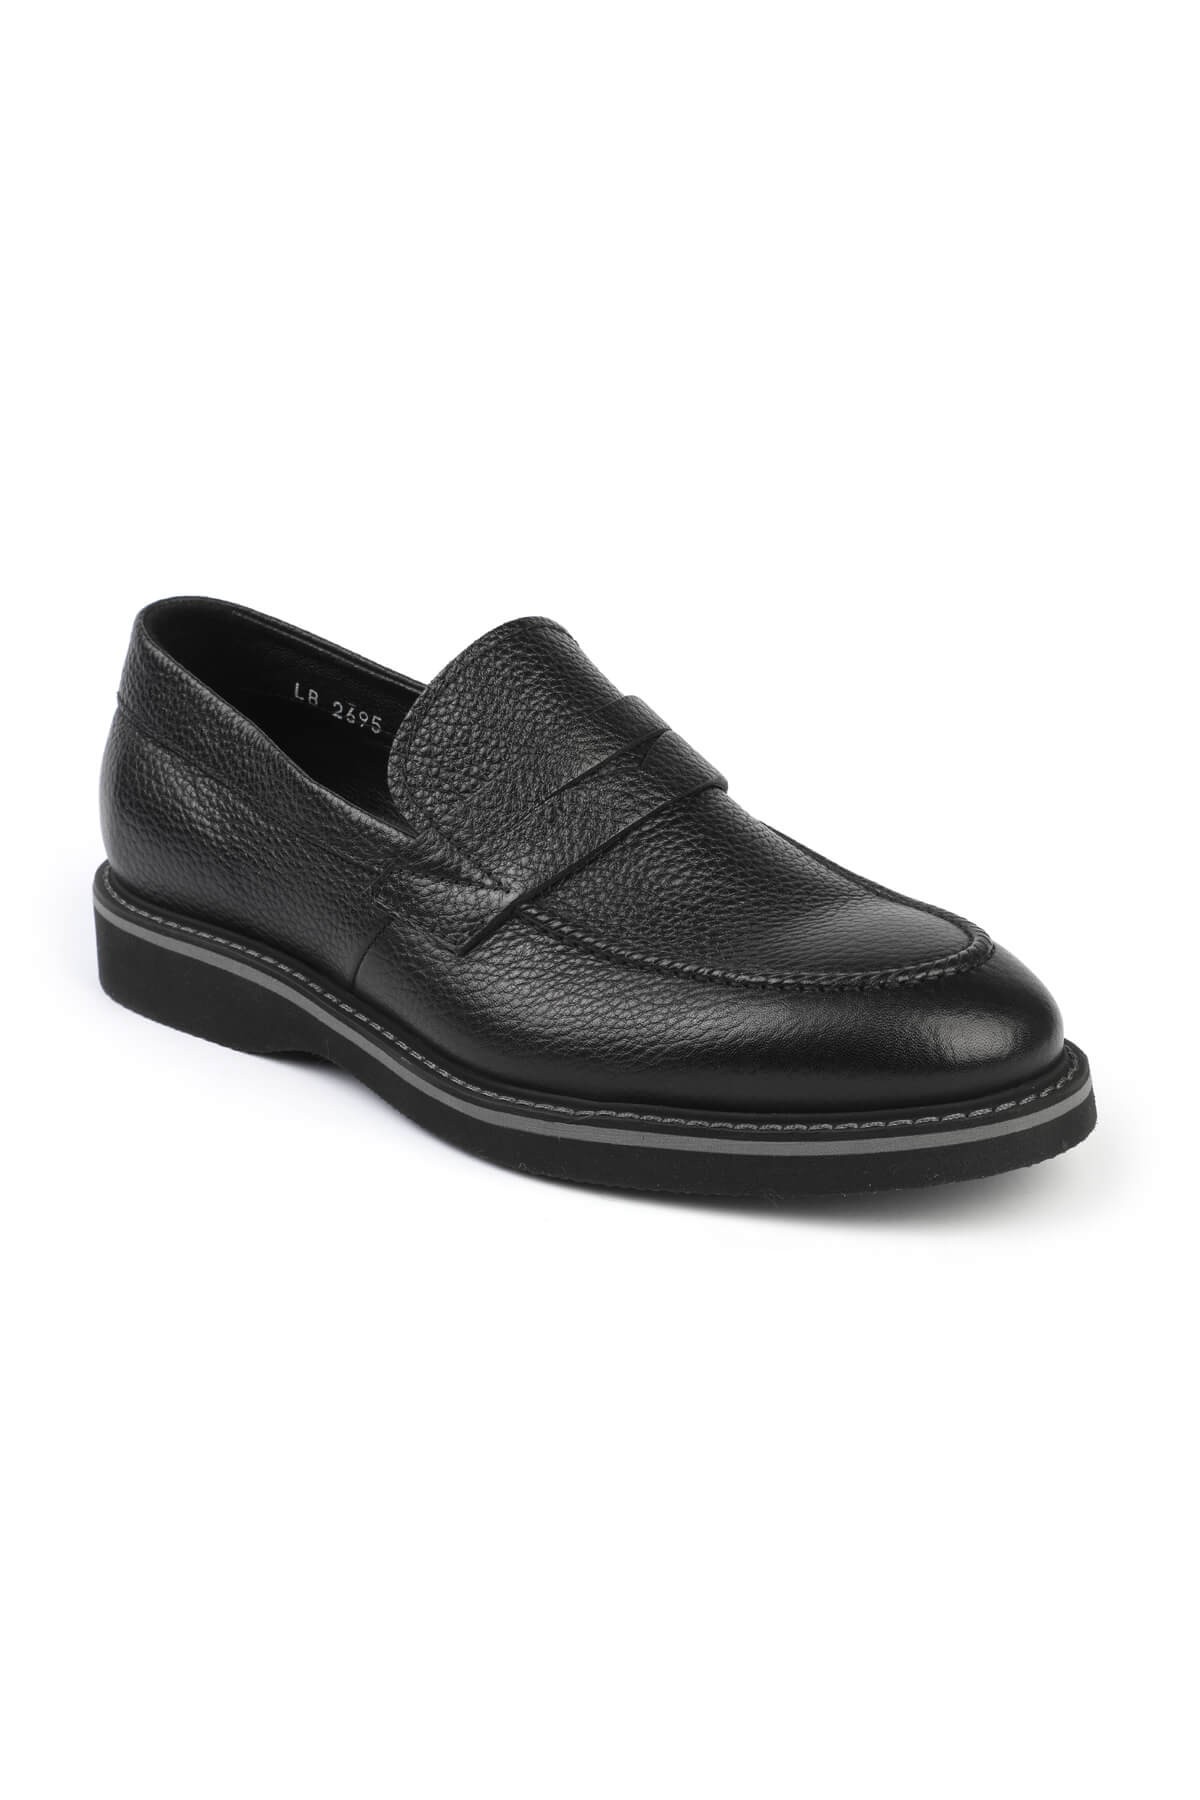 Libero 2695 Loafer Erkek Ayakkabı - SIYAH